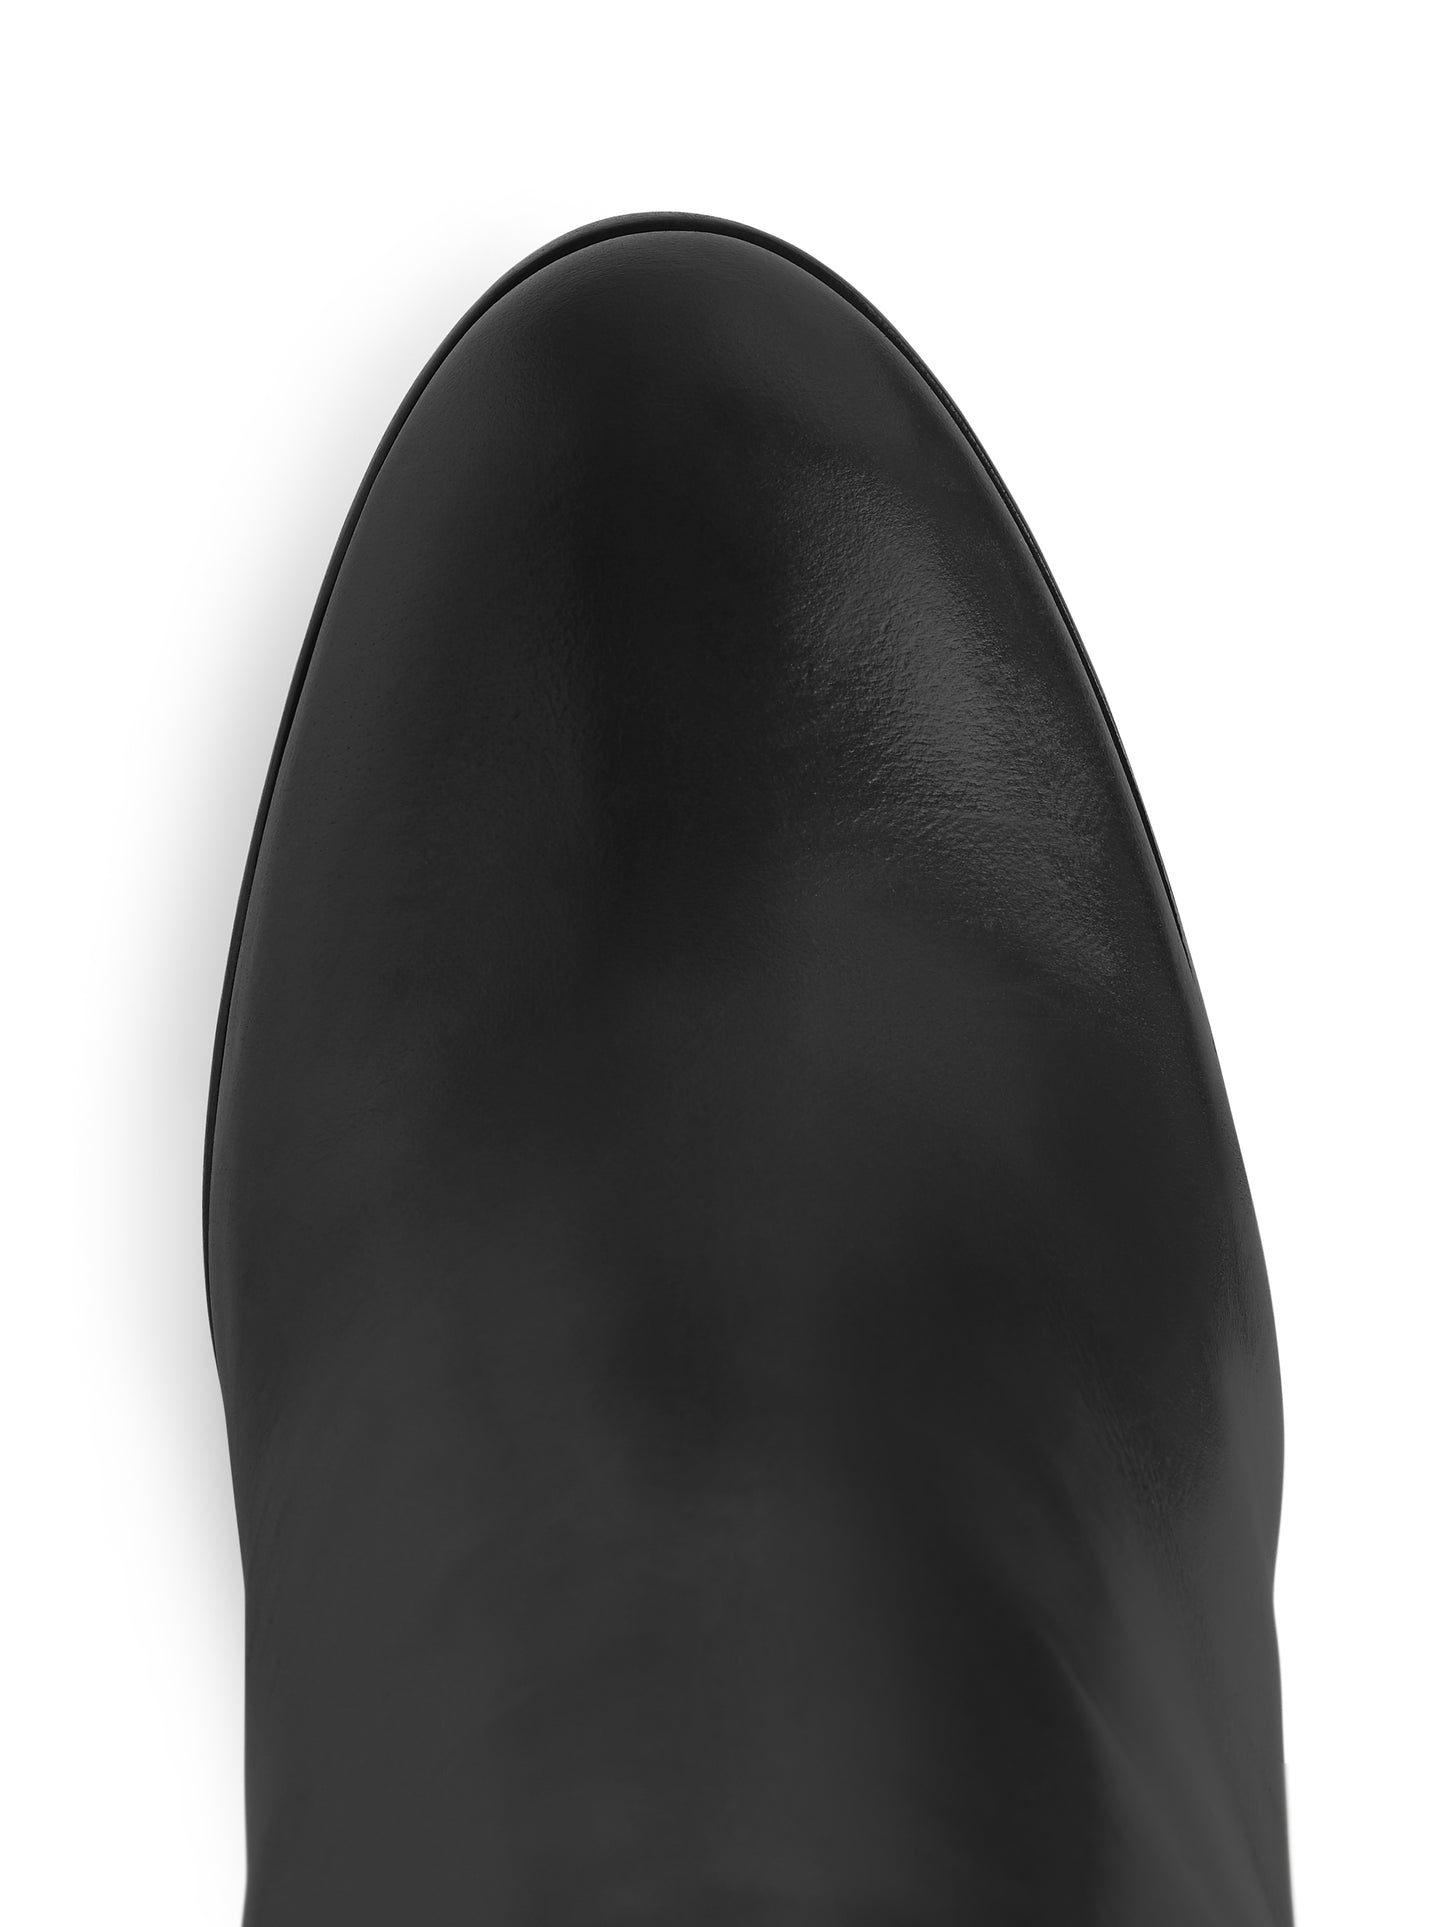 'Regina' High Heel Black Leather